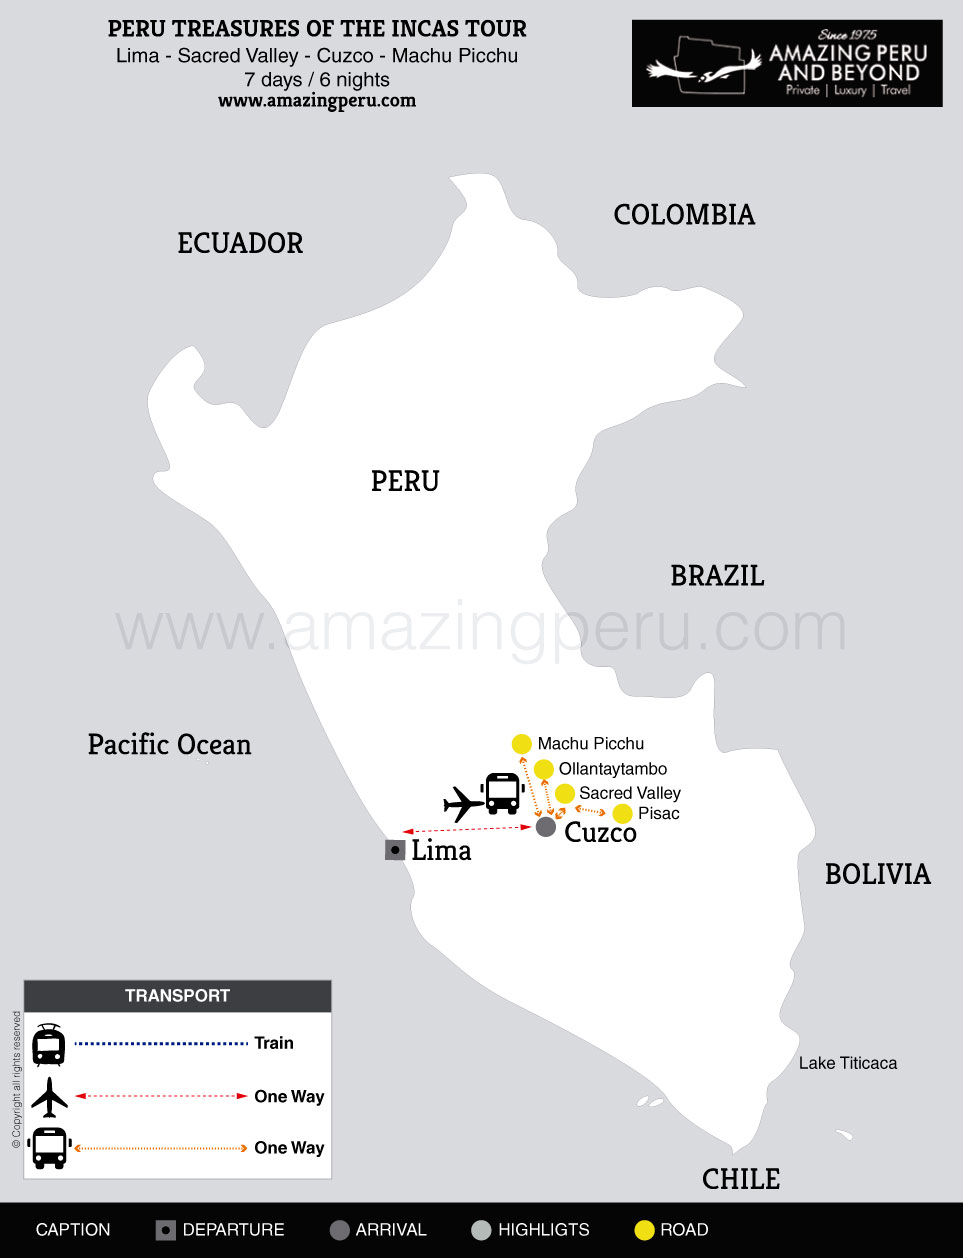 2022 Peru Treasures of the Incas Tour - 7 days / 6 nights.